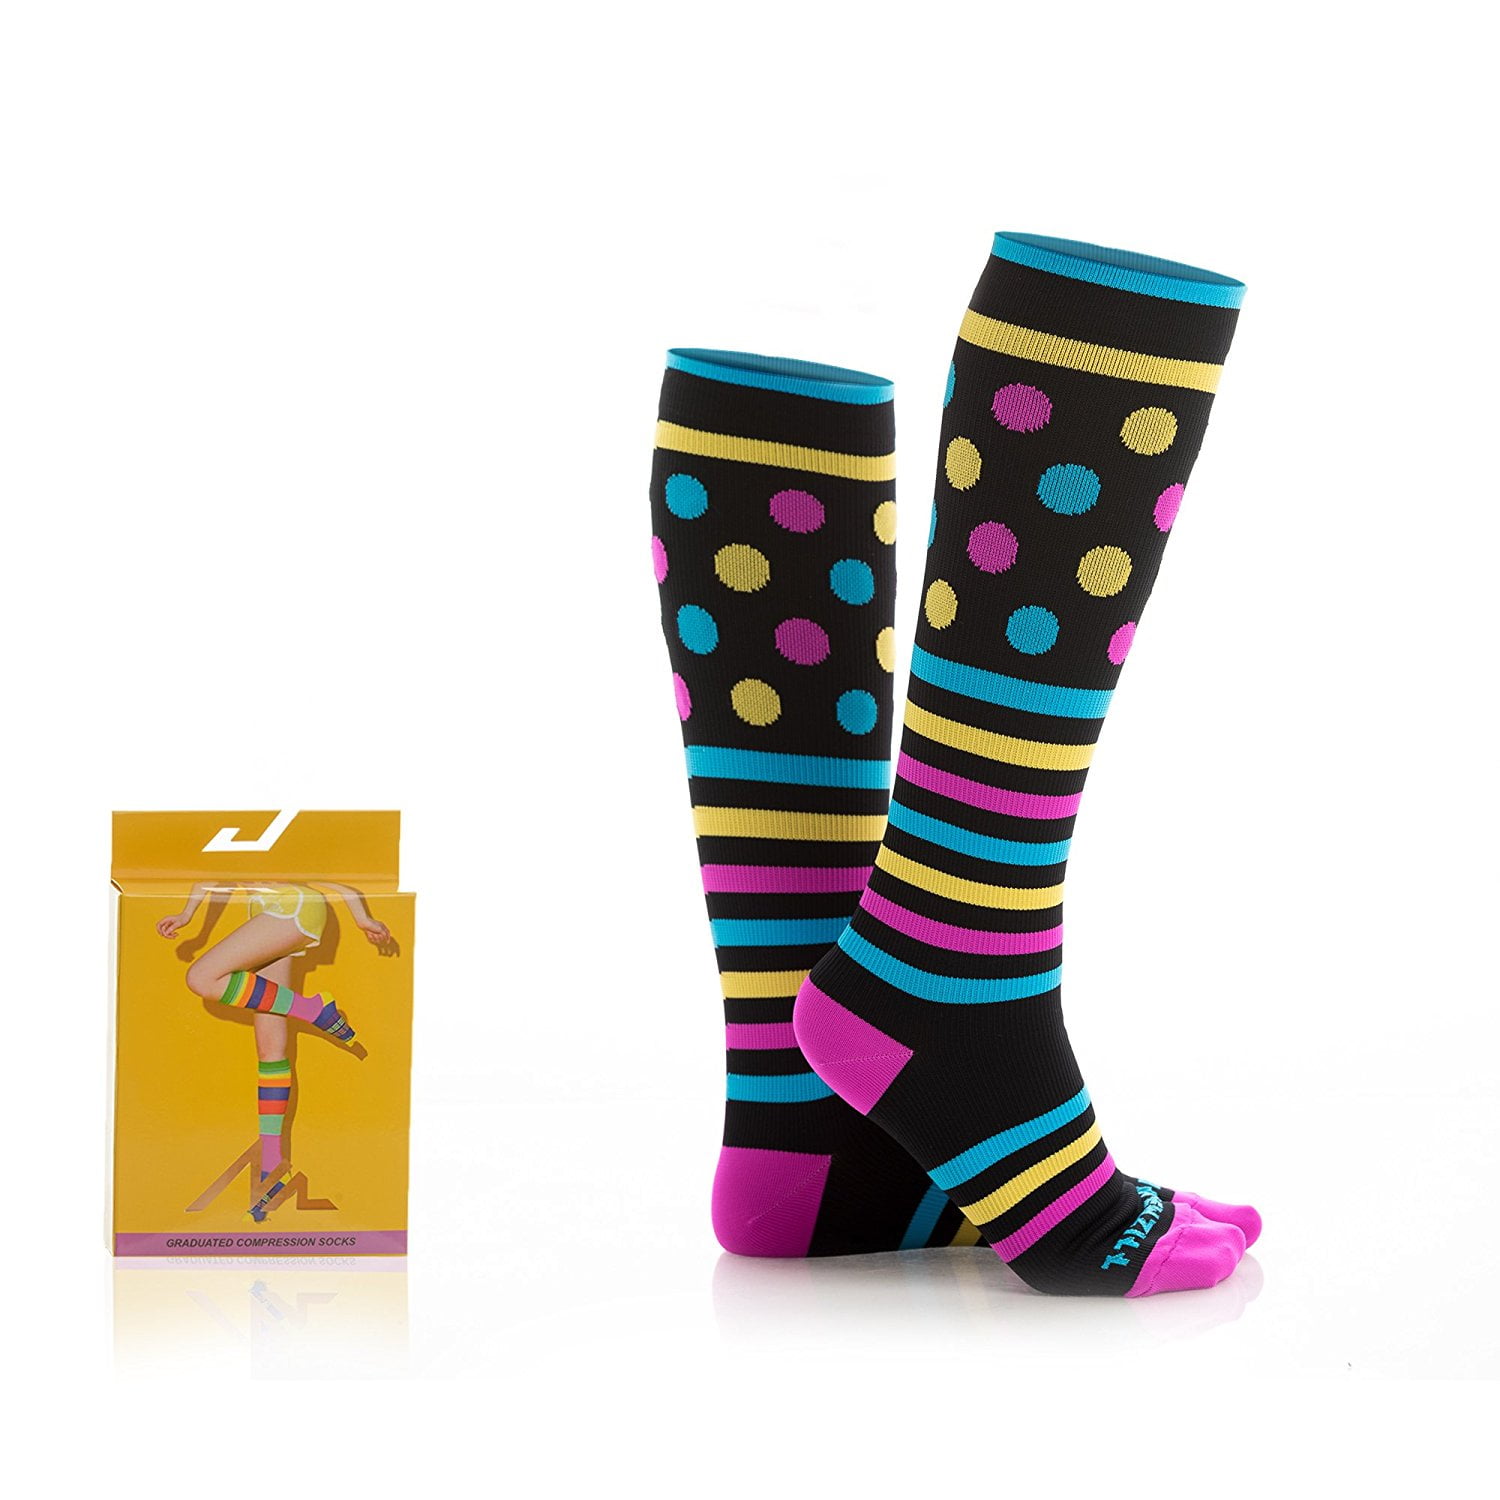 NEWZILL Compression Socks for Men & Women Medical Pregnancy Travel 20-30mmHg Diabetic Edema Best Stockings for Running Athletic Varicose Veins Shin Splints.